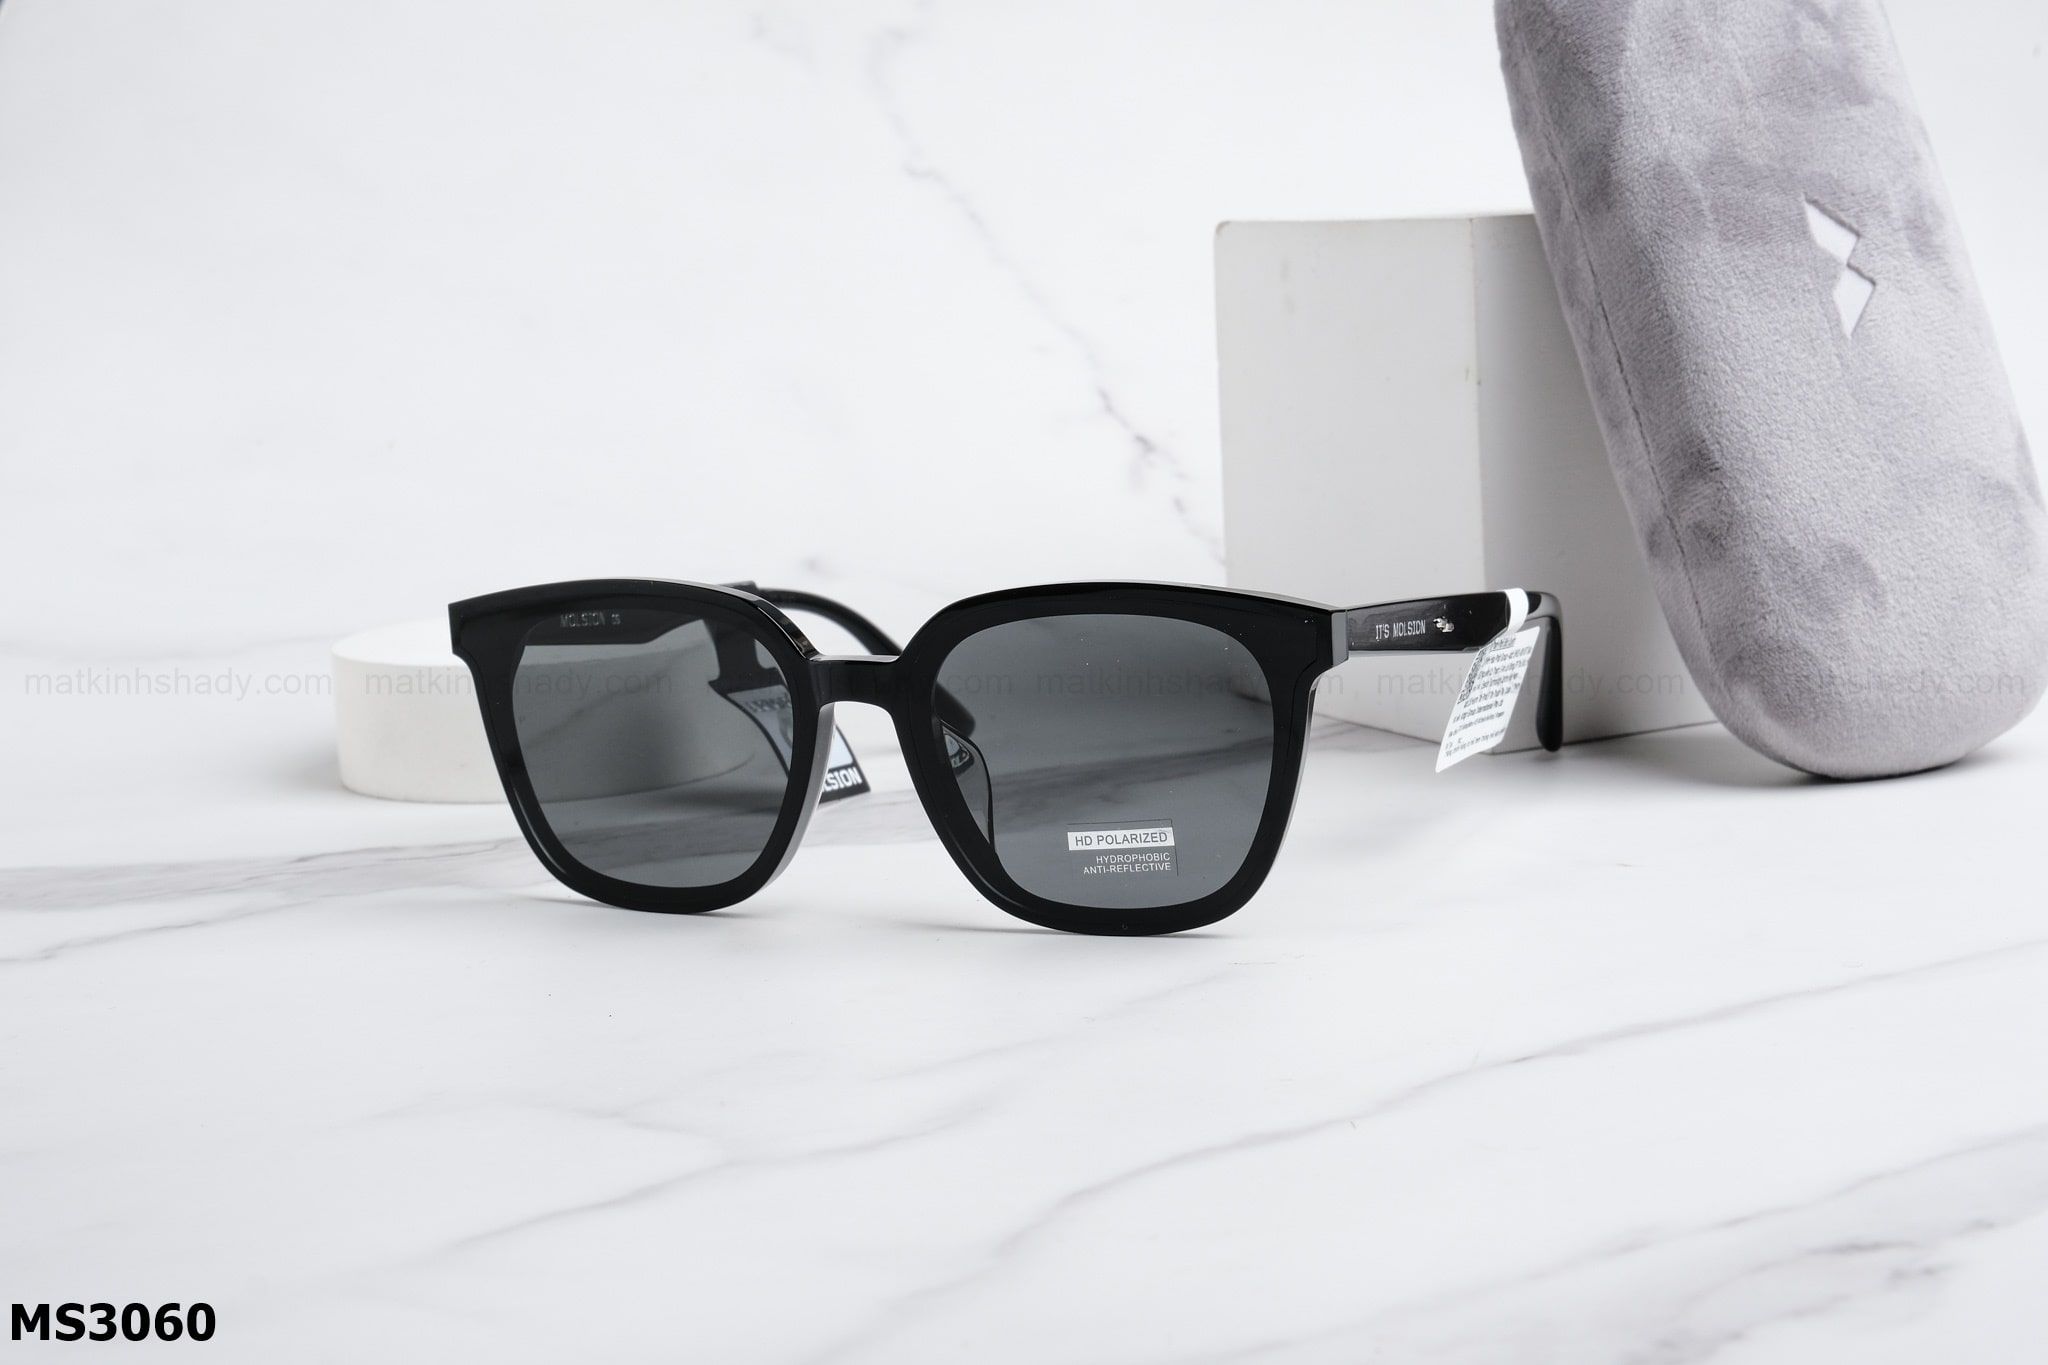  Molsion Eyewear - Sunglasses - MS3060 